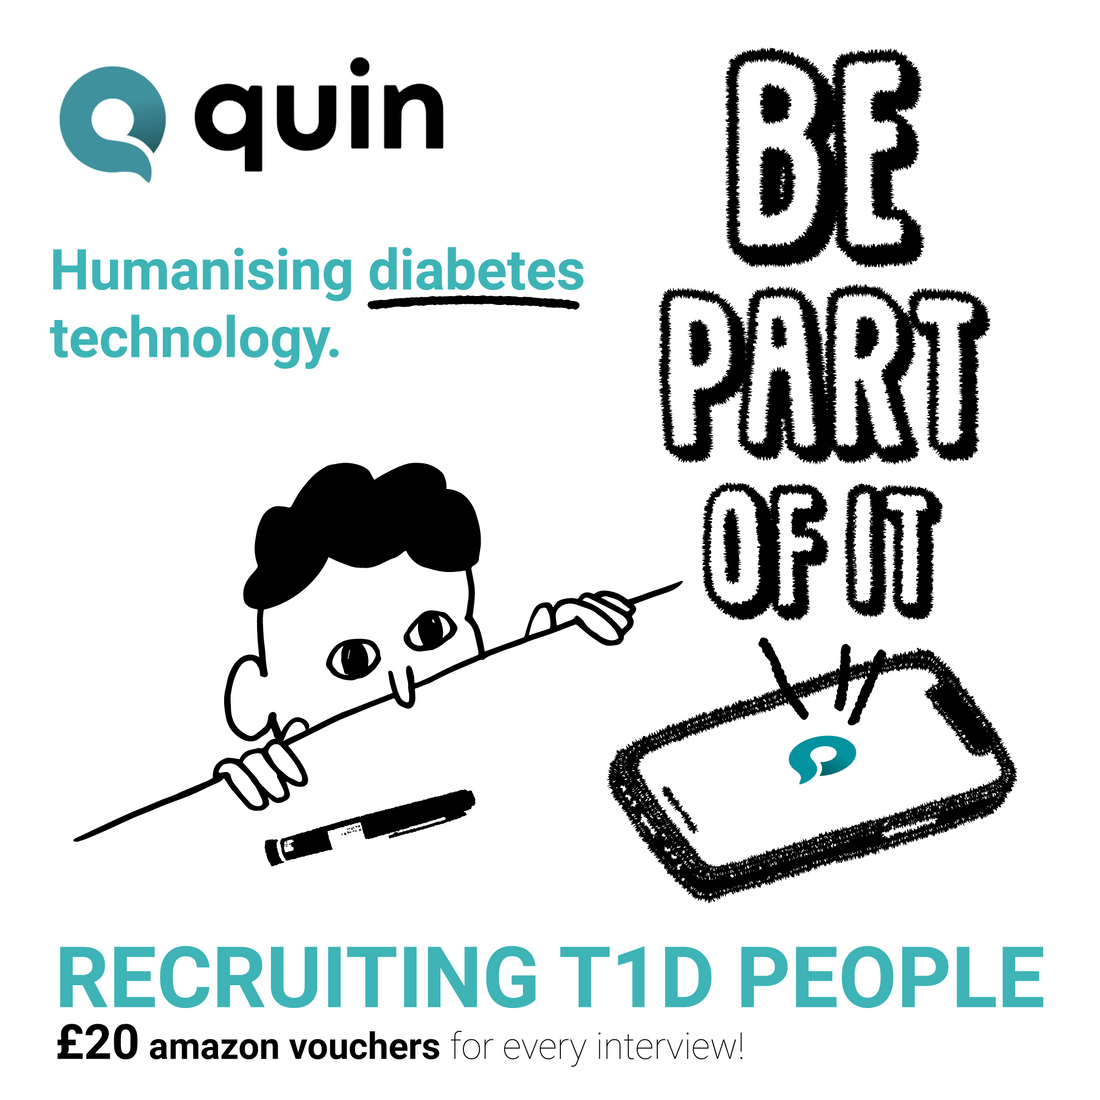 Artwork for Quin diabetes mobile app